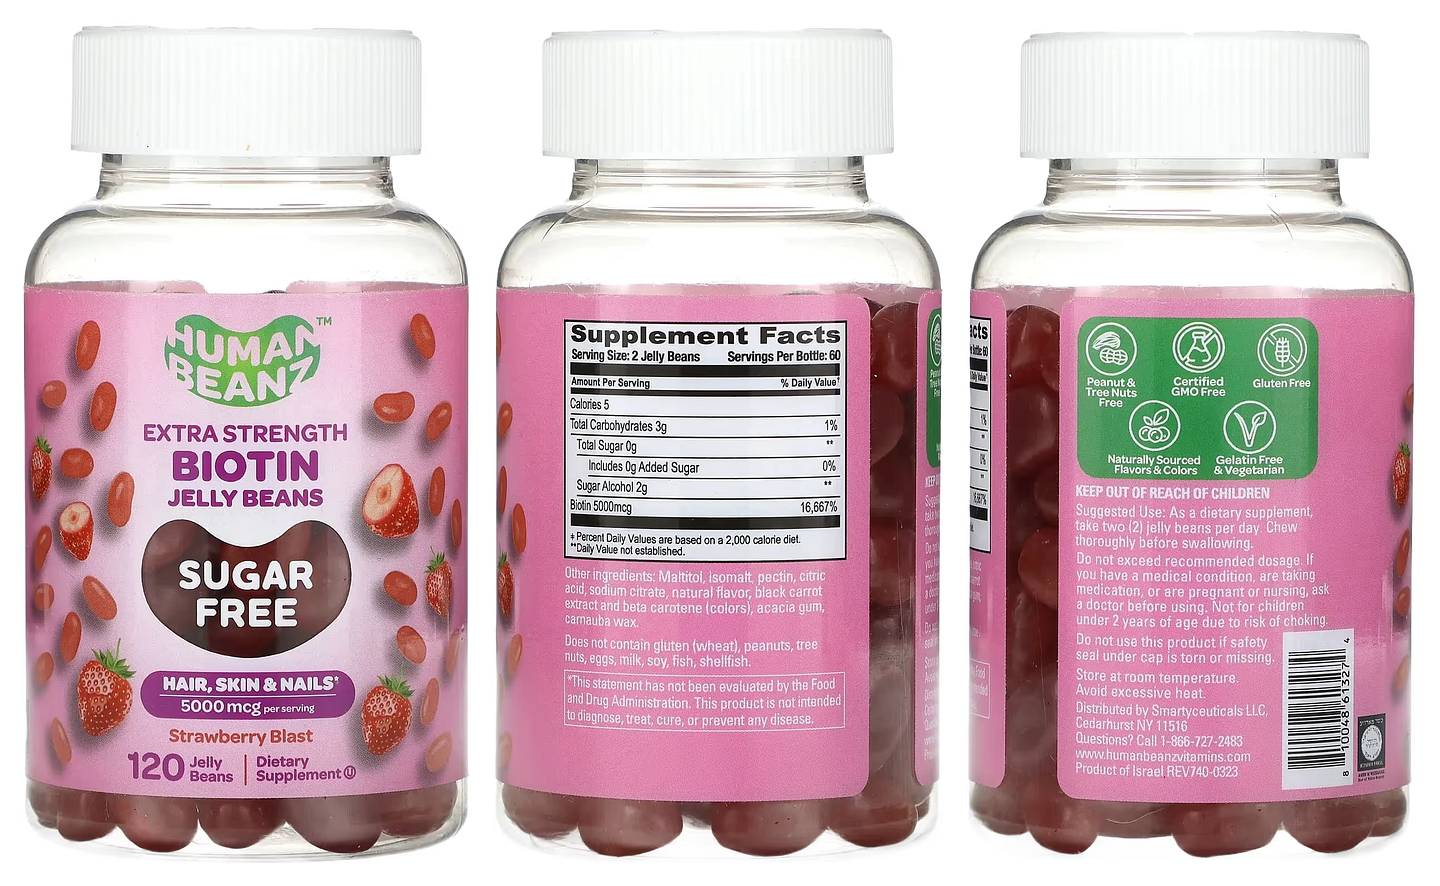 Human Beanz, Biotin Jelly Beans, Extra Strength, Sugar Free, Strawberry Blast packaging